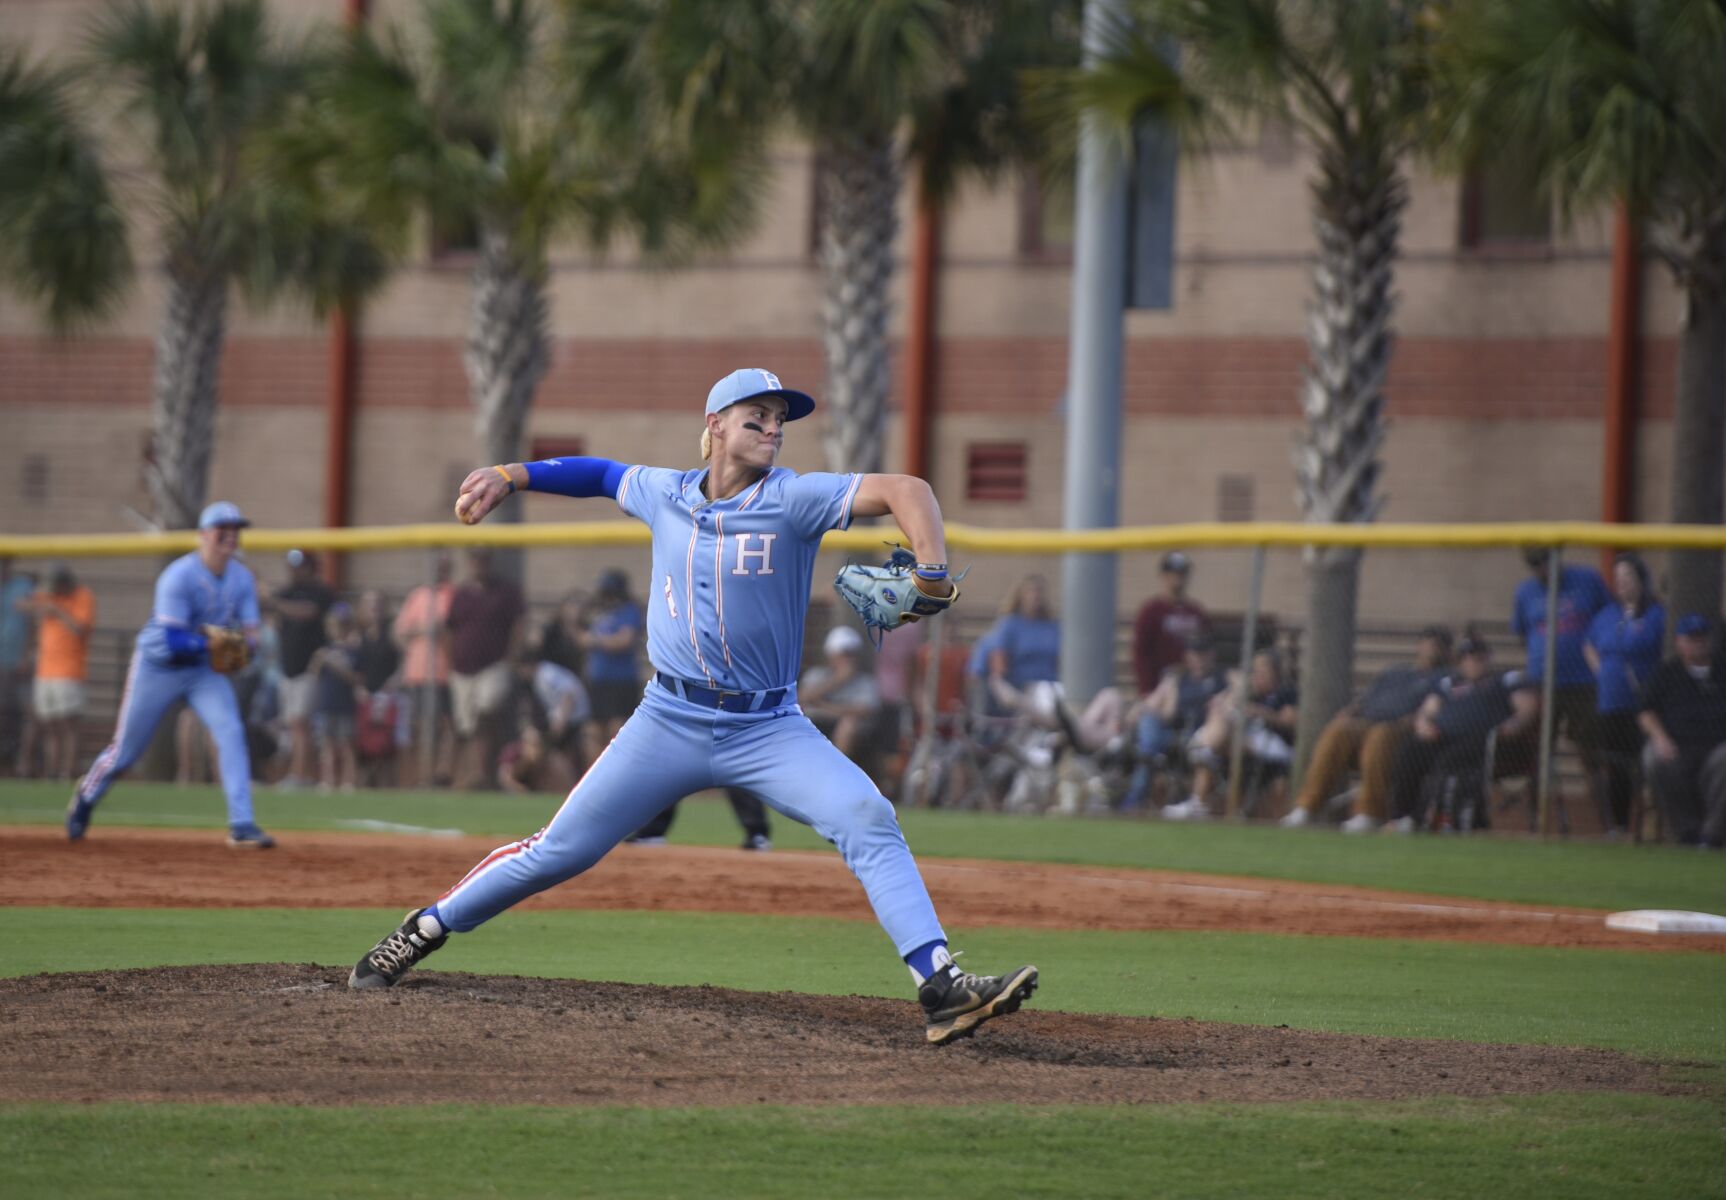 Charleston-area High Schools Sweep Baseball and Softball Finals with No-Hitter Highlights